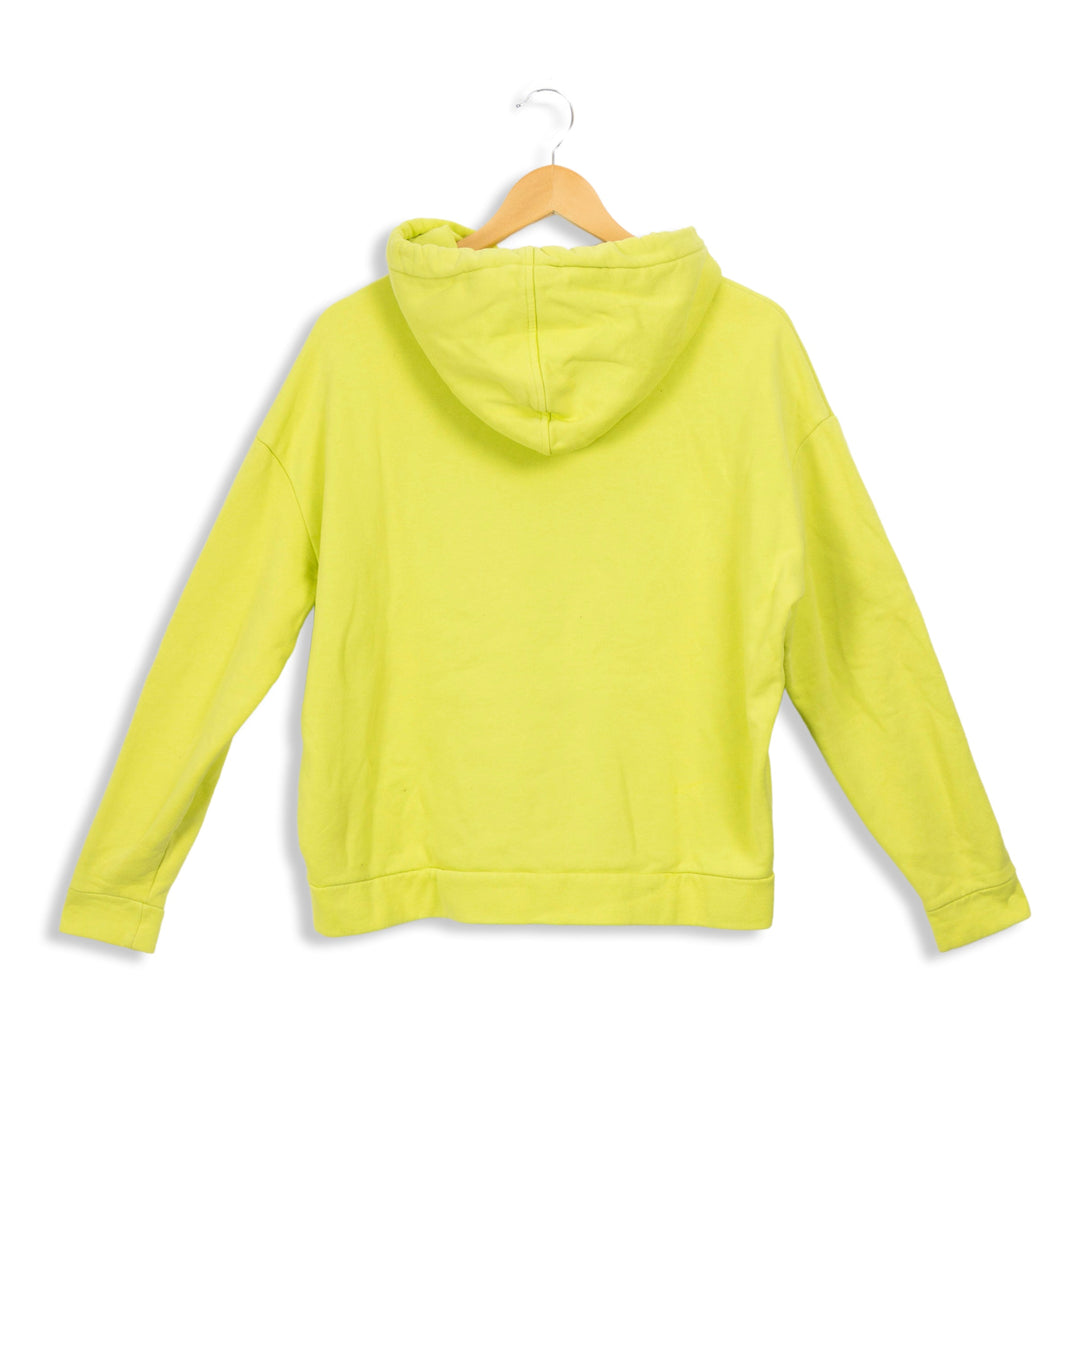 Fuo yellow sweatshirt - T1